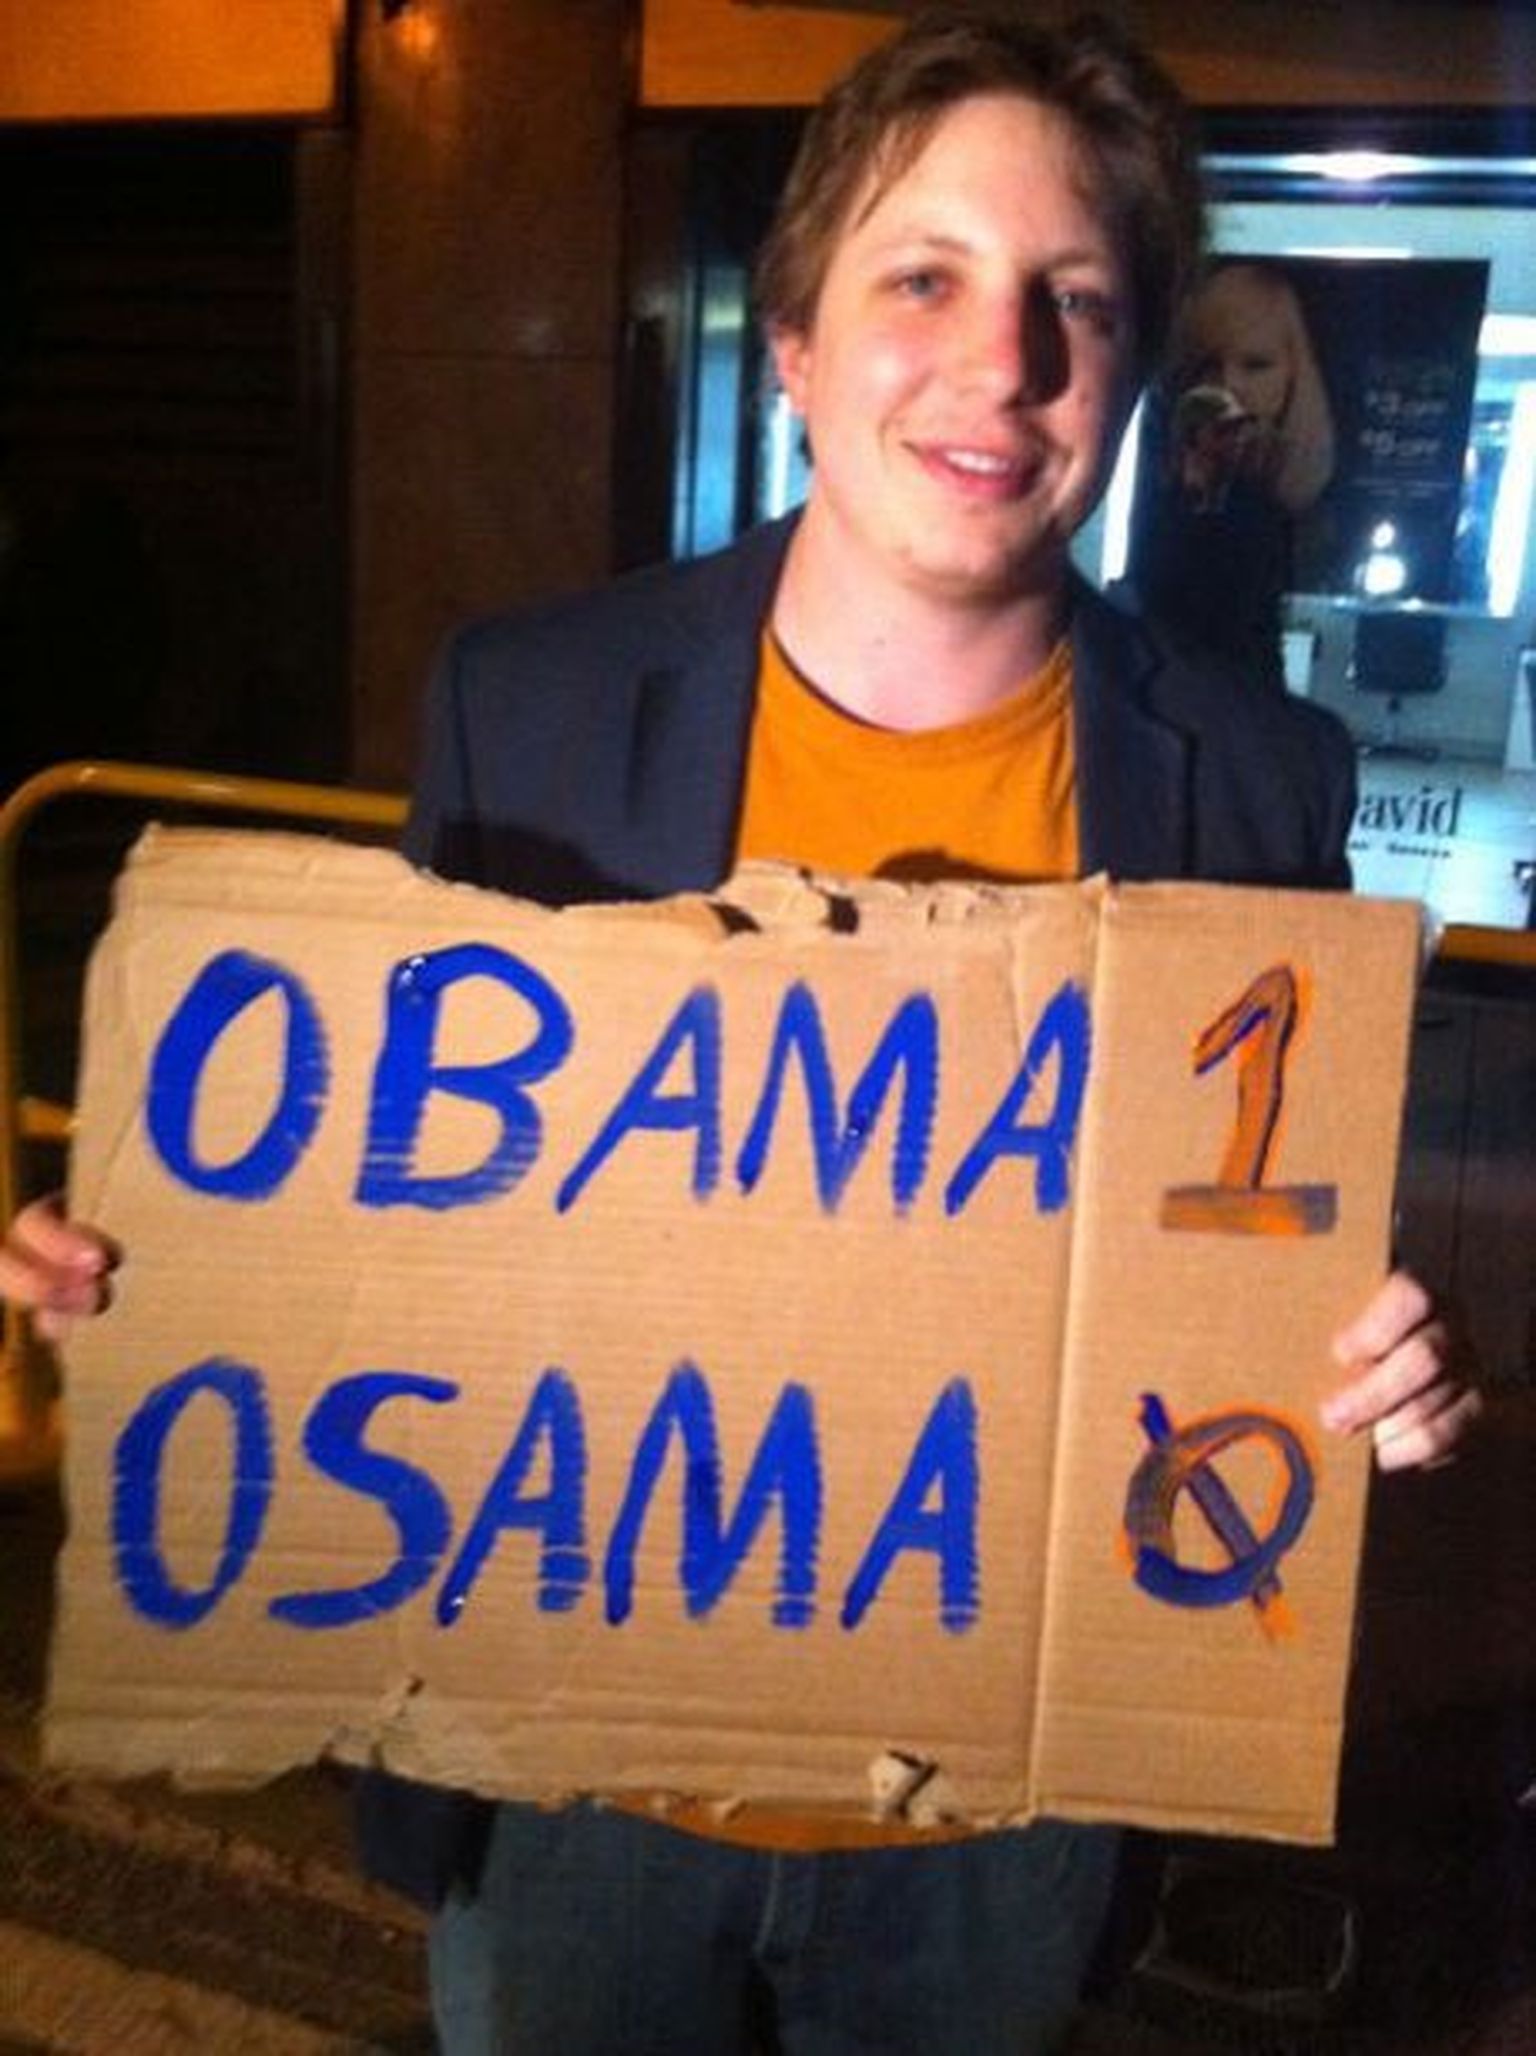 Obama 1 - Osama 0